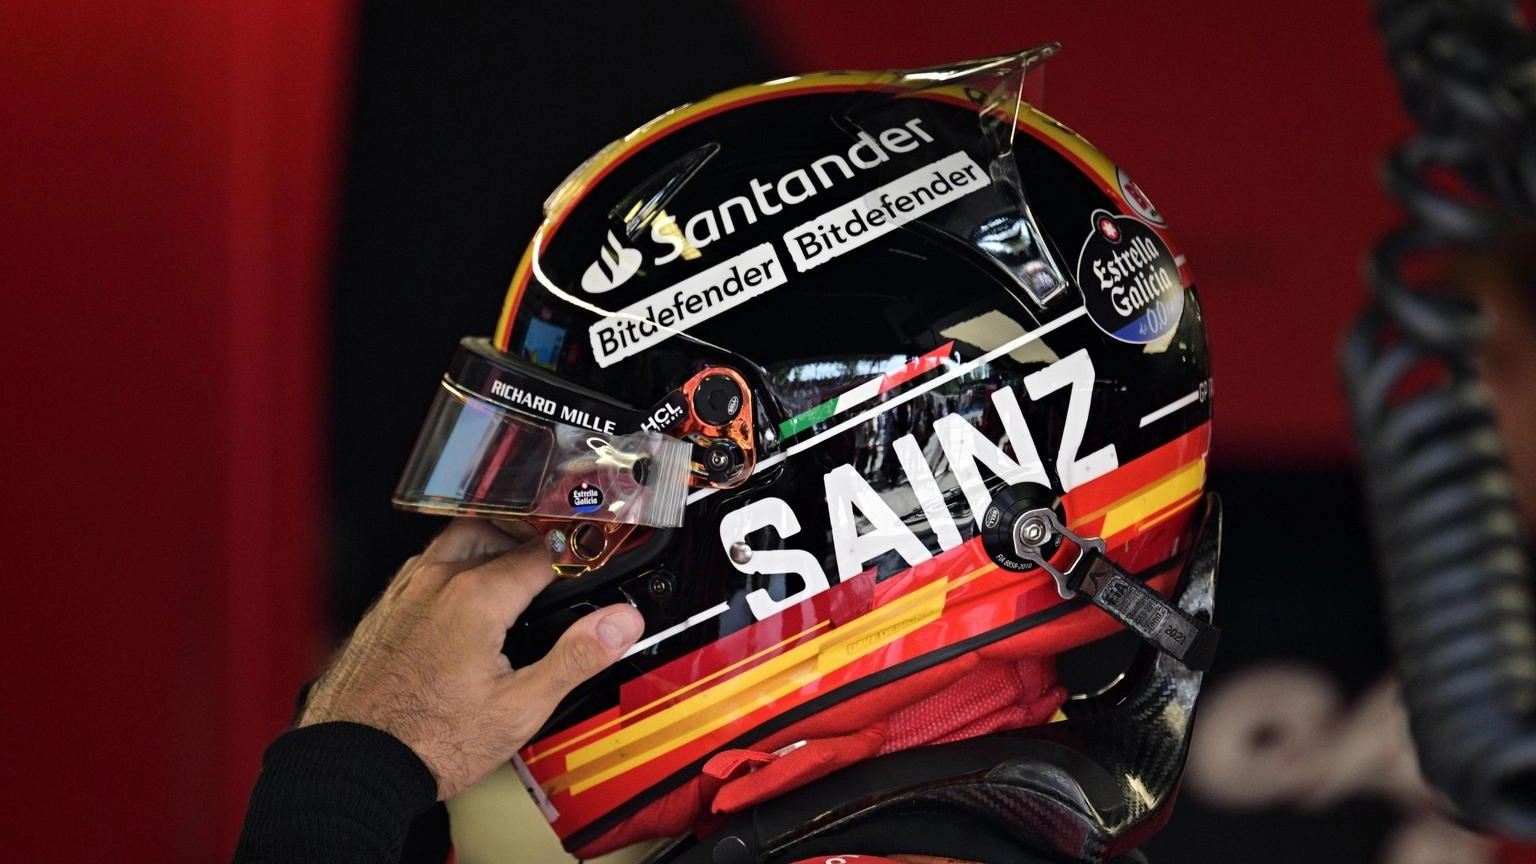 Sainz ringrazia la polizia italiana, F1" (90 characters)"